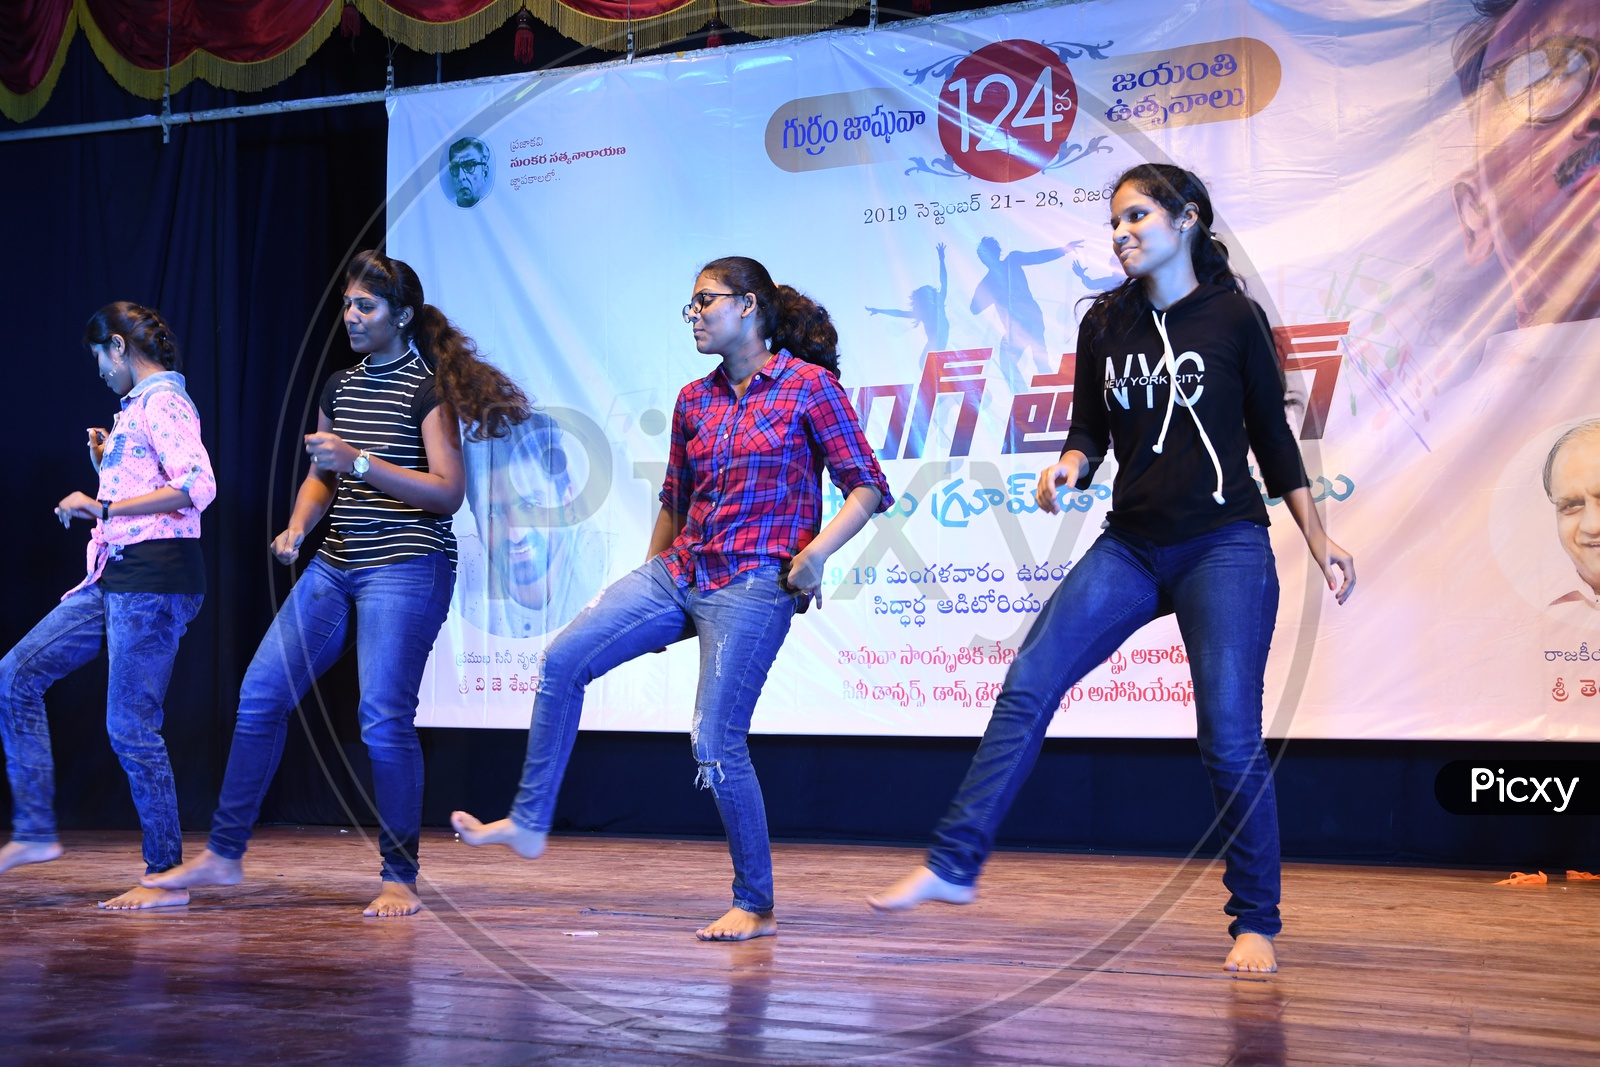 Indian Girls performing western dance